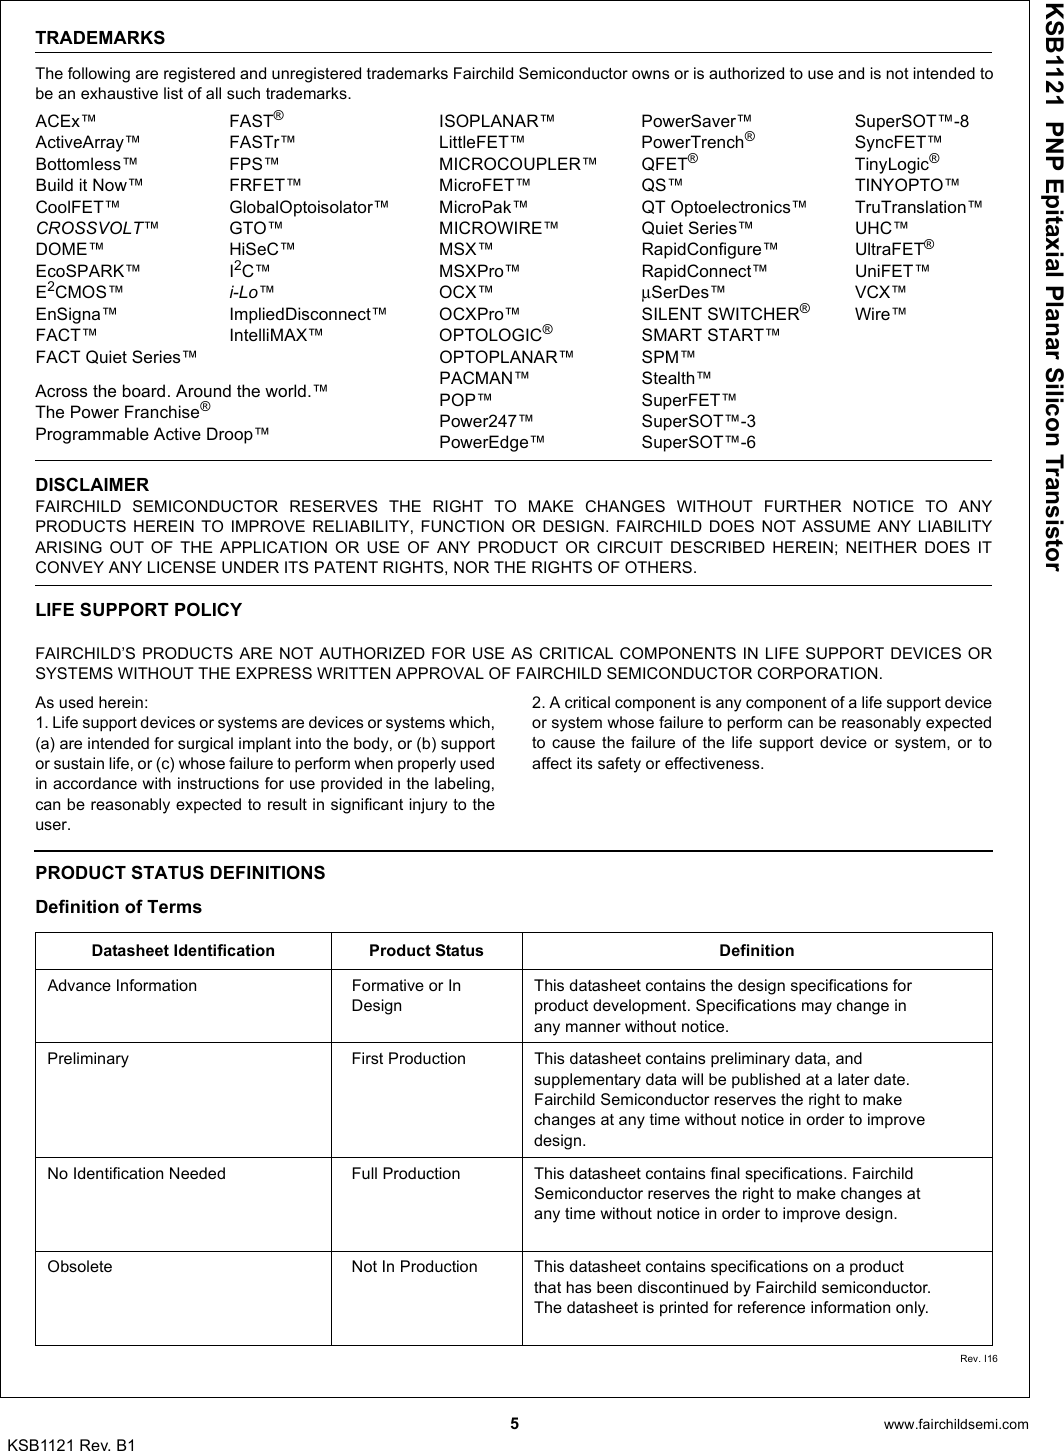 Page 5 of 6 - KSB1121 - Datasheet. Www.s-manuals.com. Fairchild